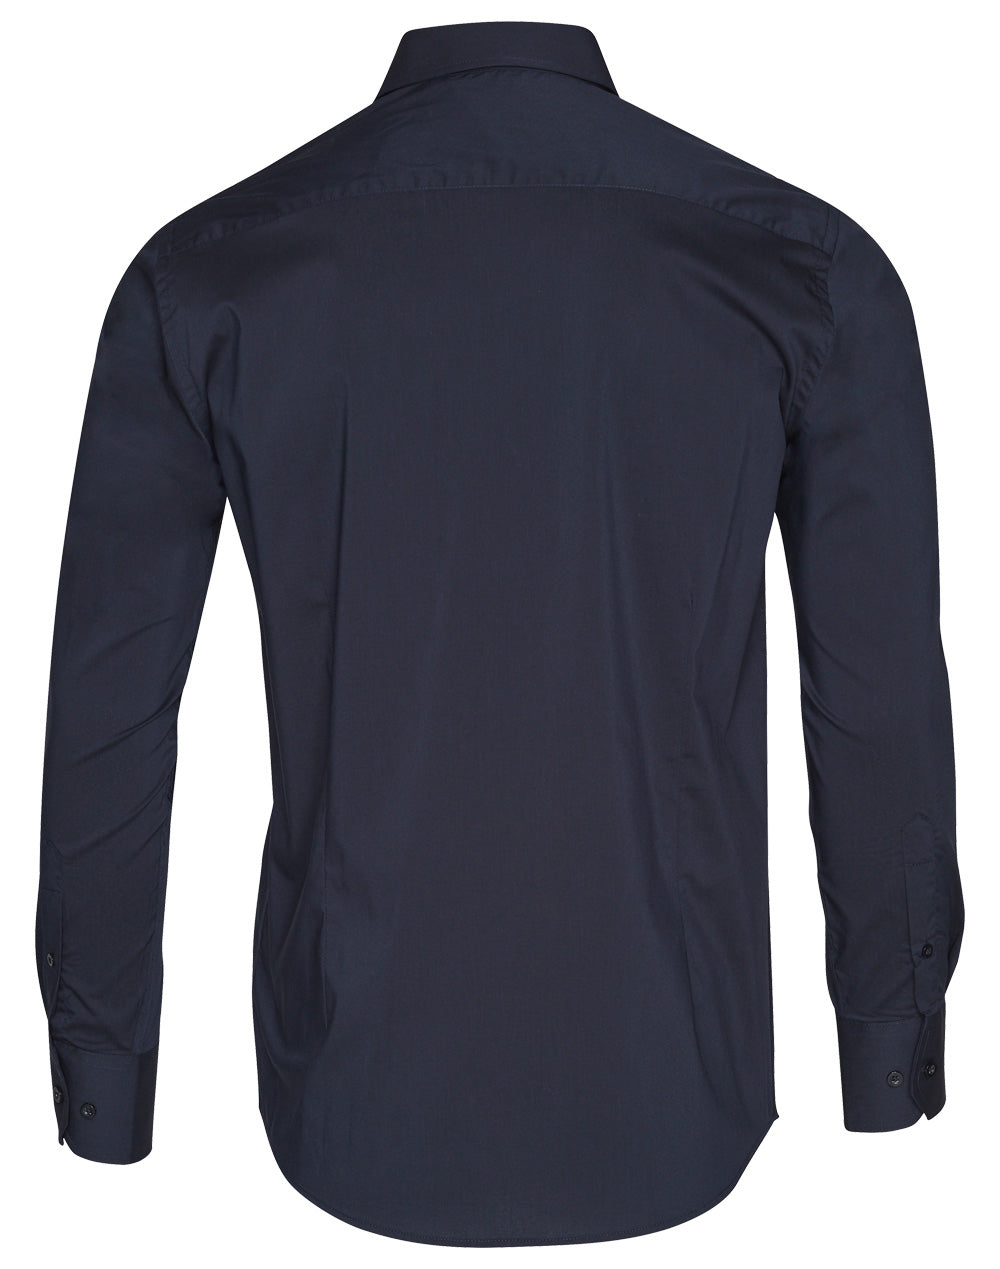 Benchmark BS08L Men's Teflon Executive Long Sleeve Shirt